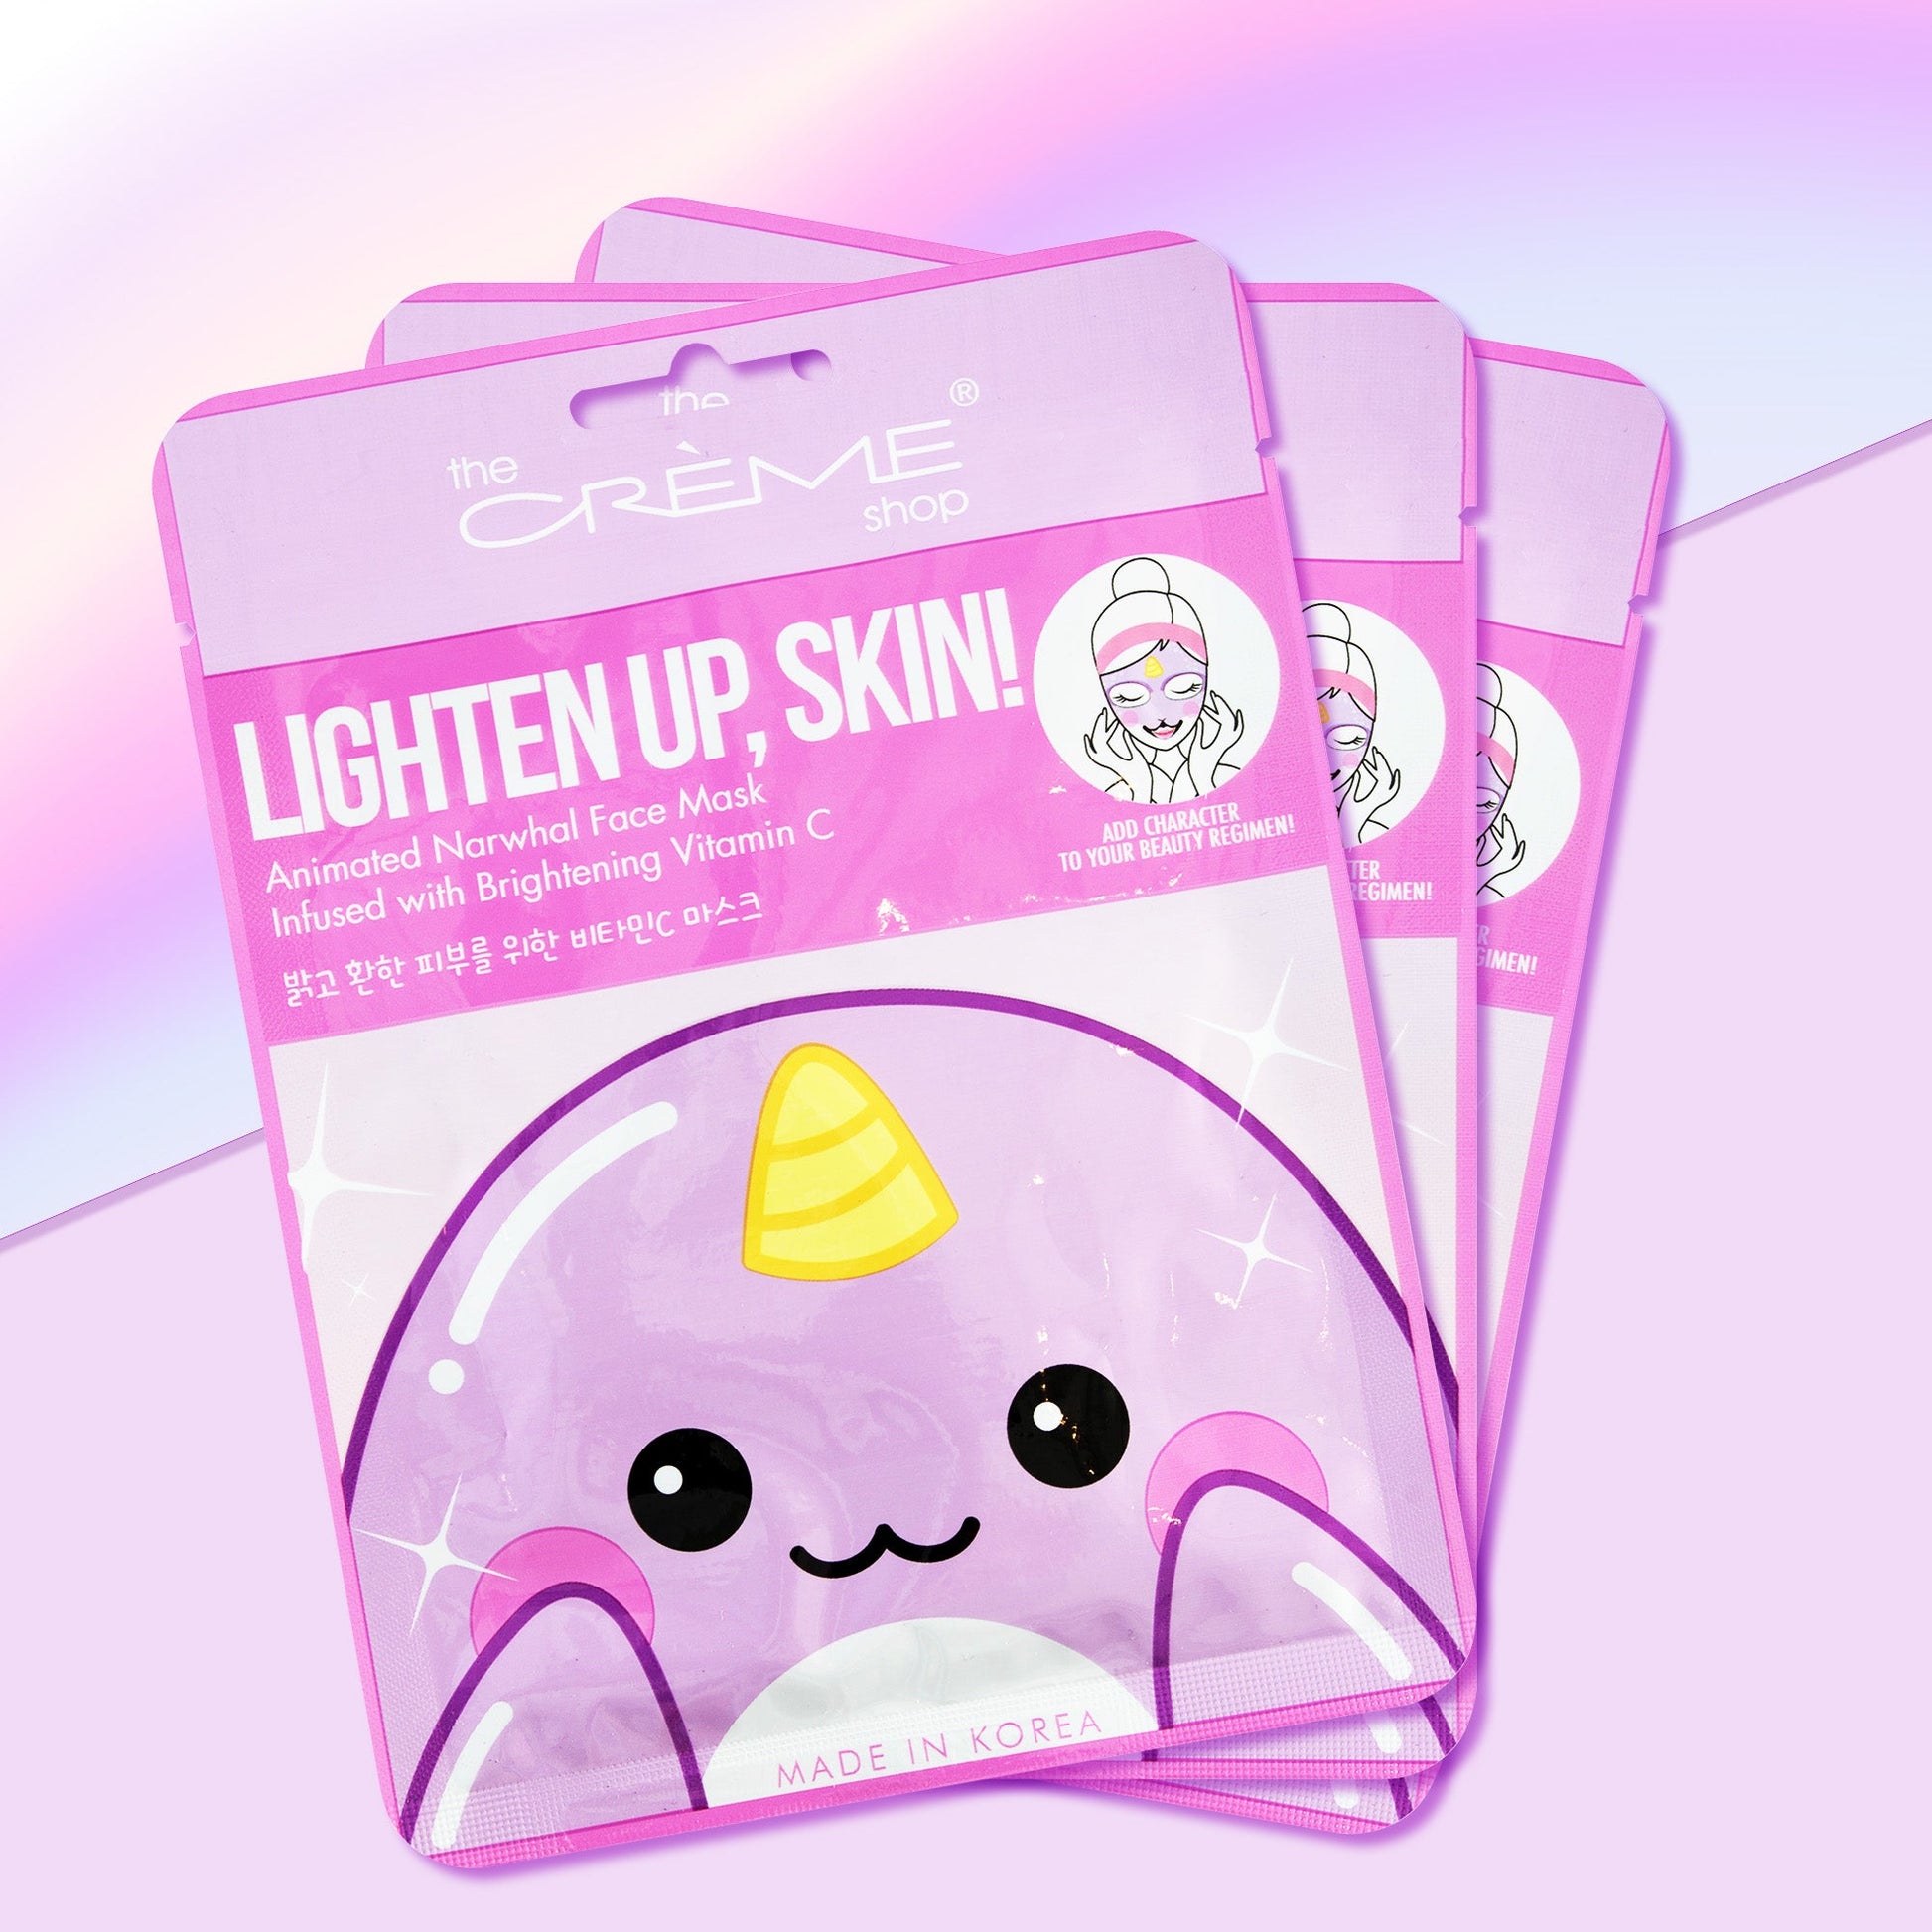 The Crème Shop Glow Up, Skin! Mascarilla facial unicornio Iluminadora 25g